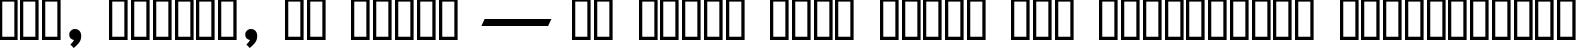 Пример написания шрифтом ITC Bookman Demi текста на украинском